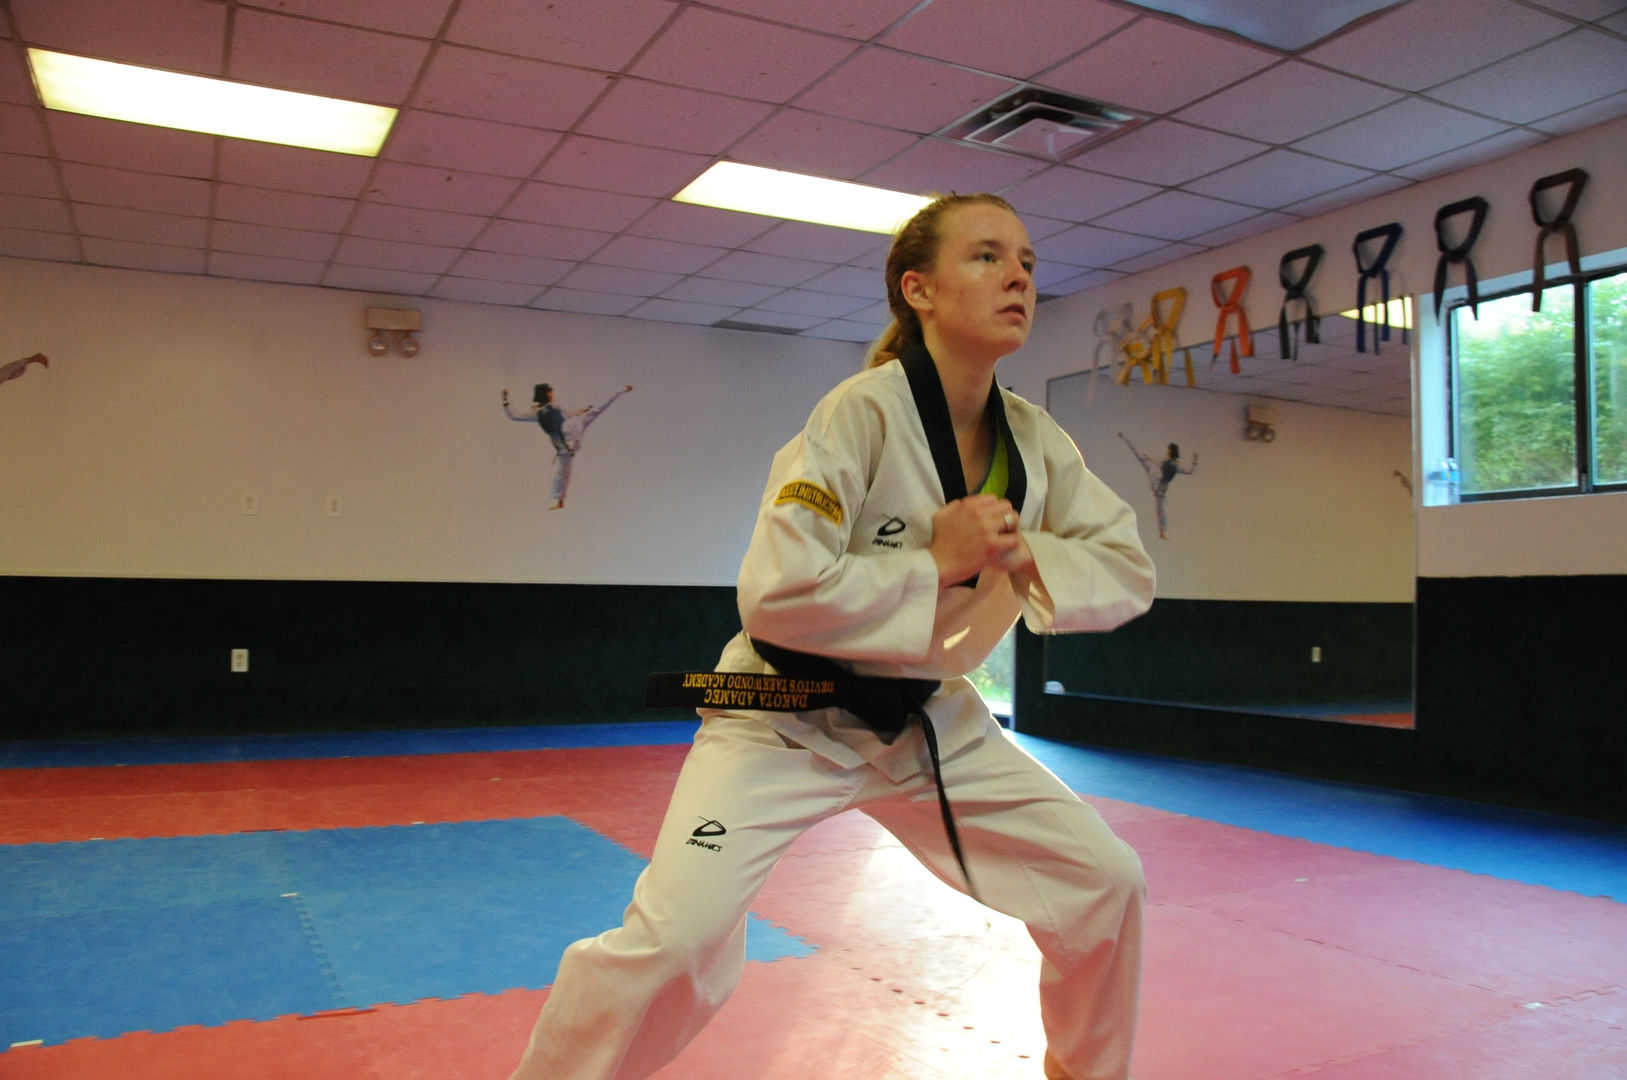 Taekwondo, Martial Arts School, Kickboxing, Cage Fitness, Self Defense